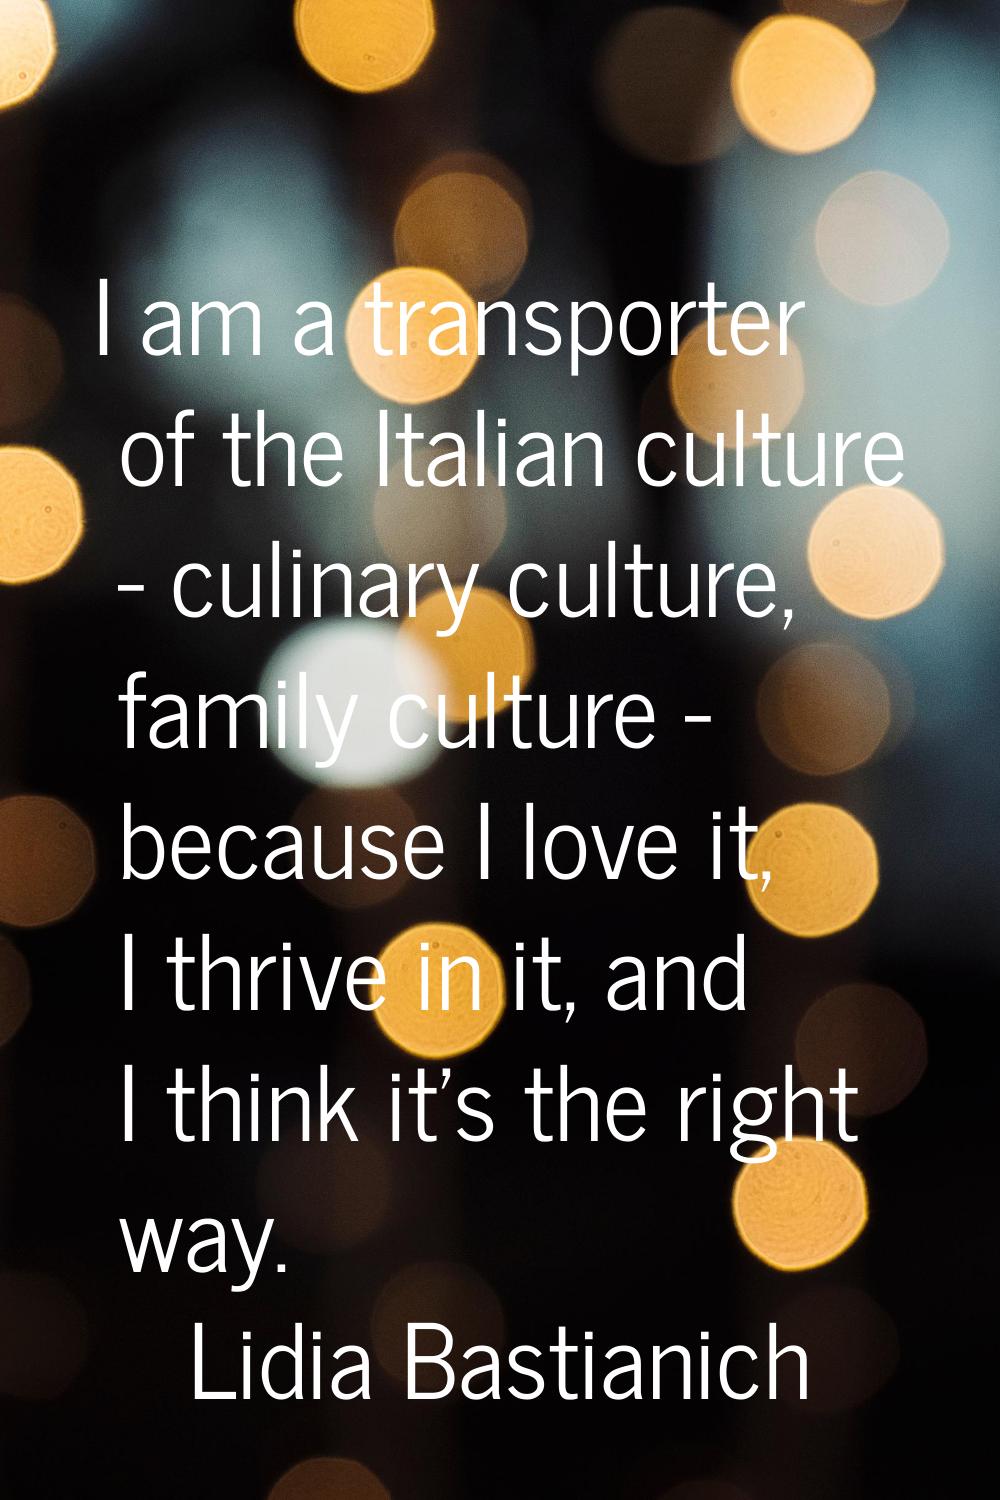 I am a transporter of the Italian culture - culinary culture, family culture - because I love it, I